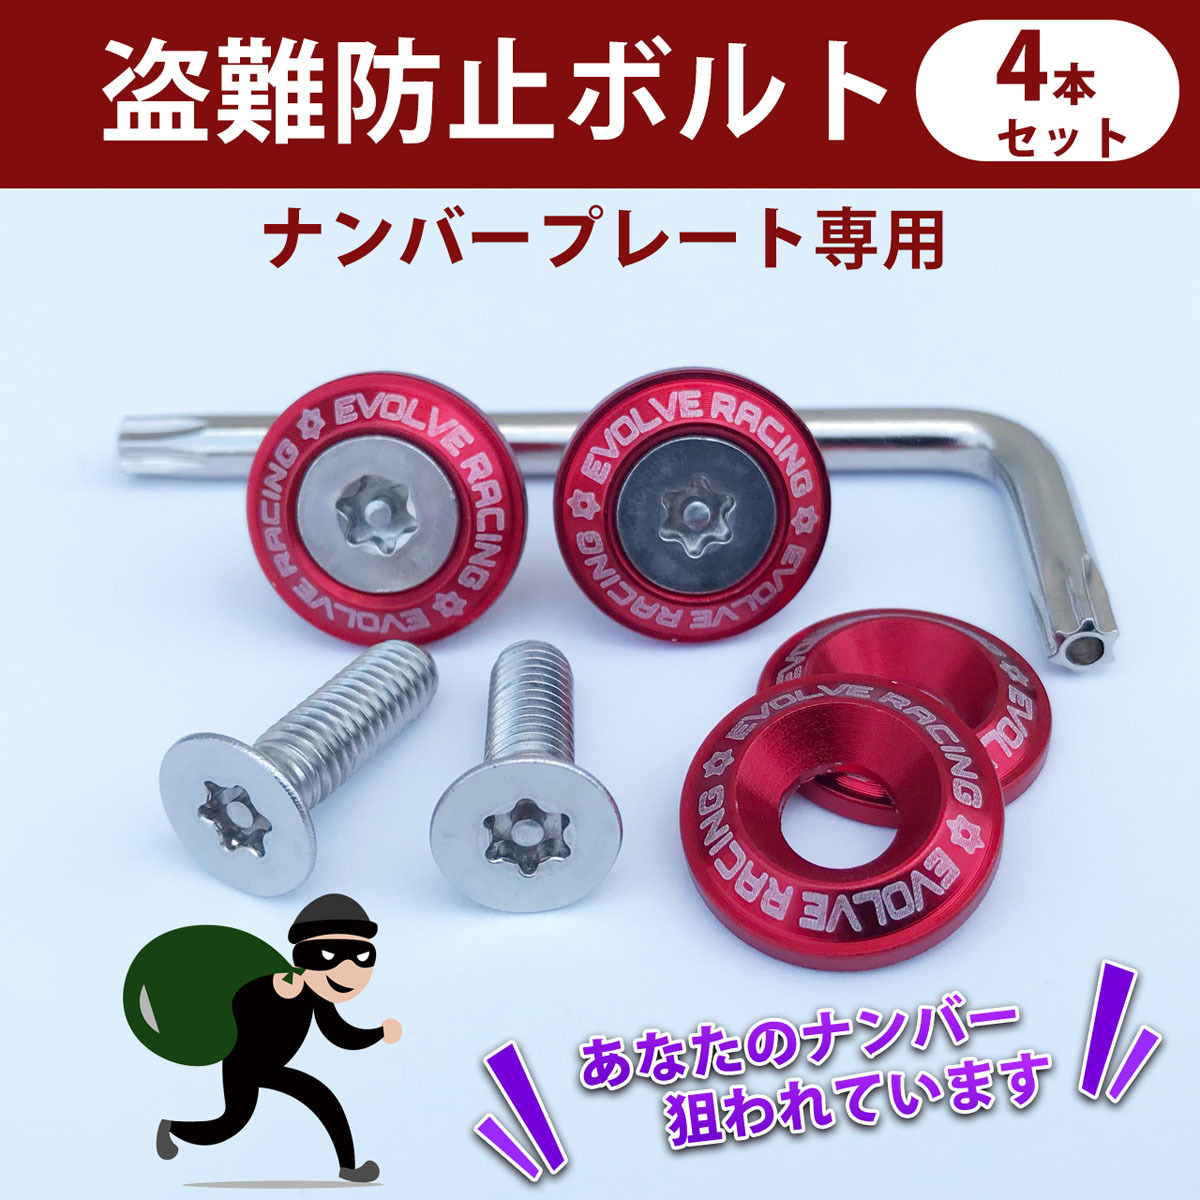  anti-theft bolt * red color * number plate exclusive use * wake Atrai Wagon Boon Rocky Hijet Daihatsu DAIHATSU